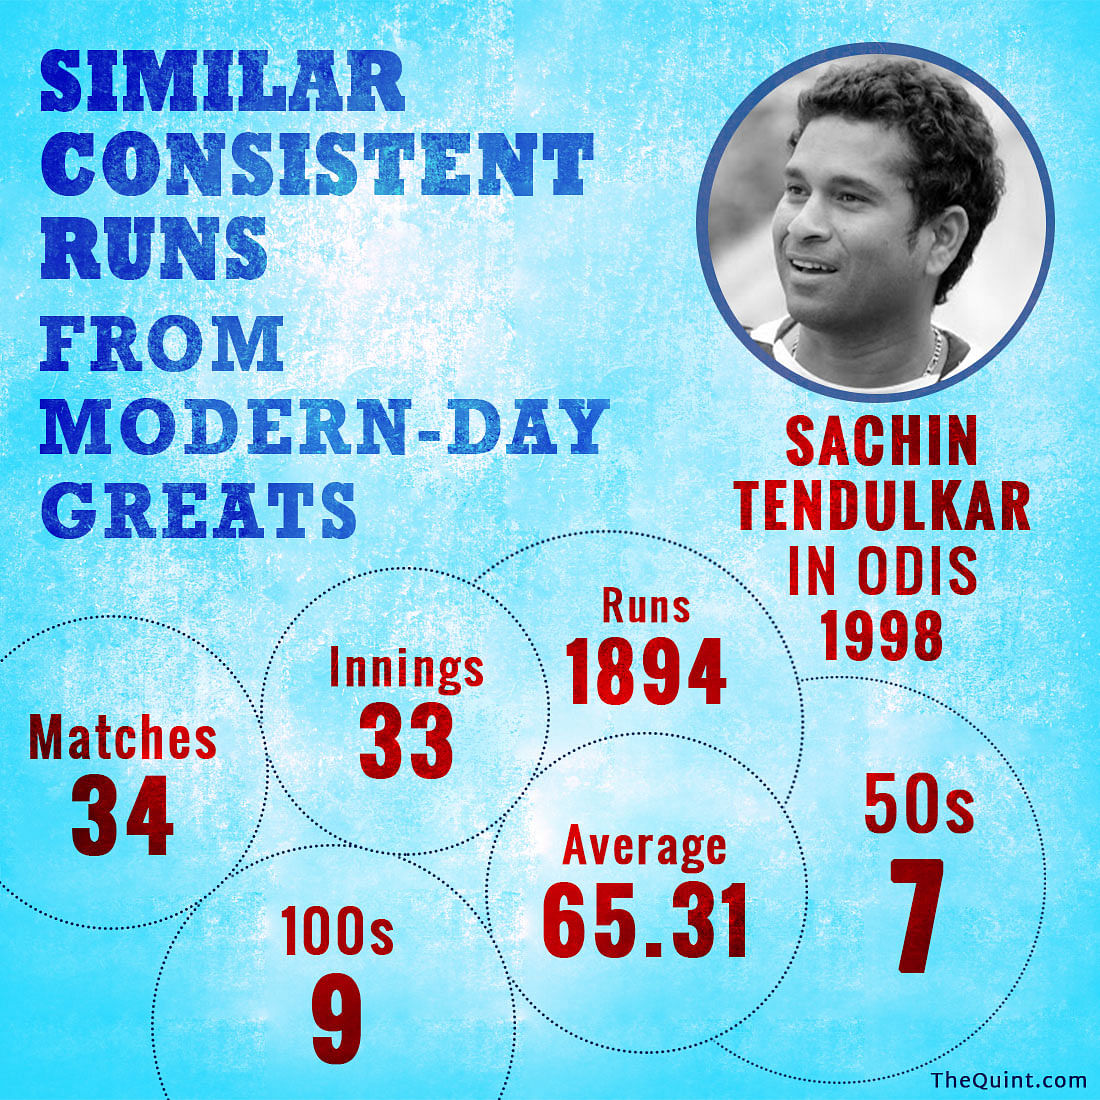 Here’s comparing Virat Kohli’s blistering run this year to that of legends like Viv Richards and Sachin Tendulkar.